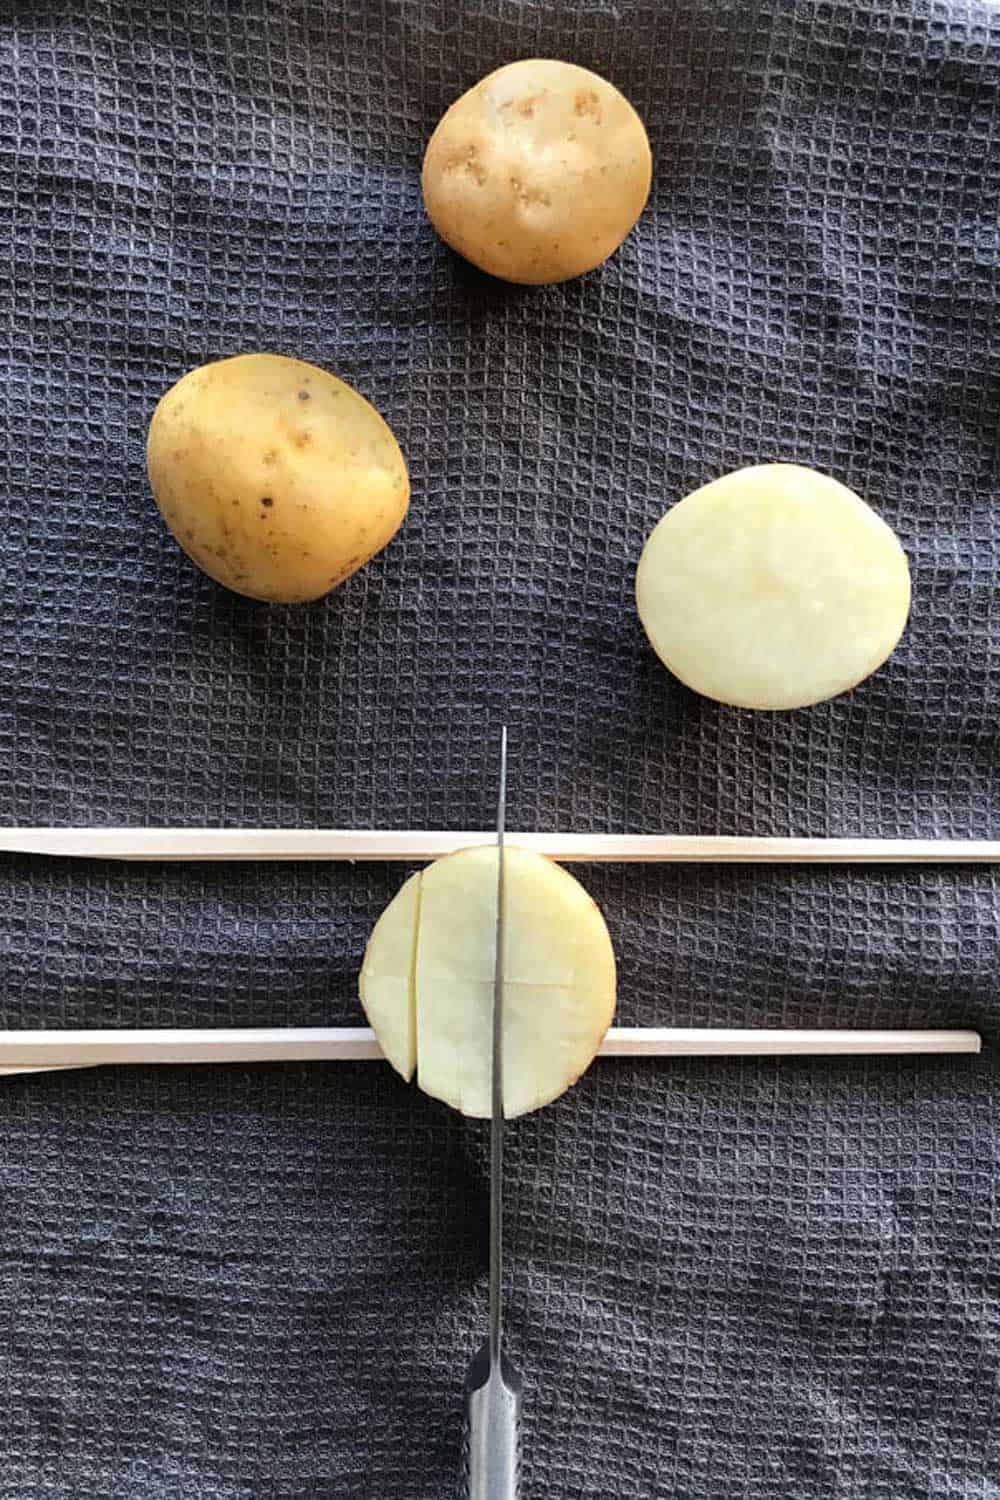 How to cut a Hasselback Potato